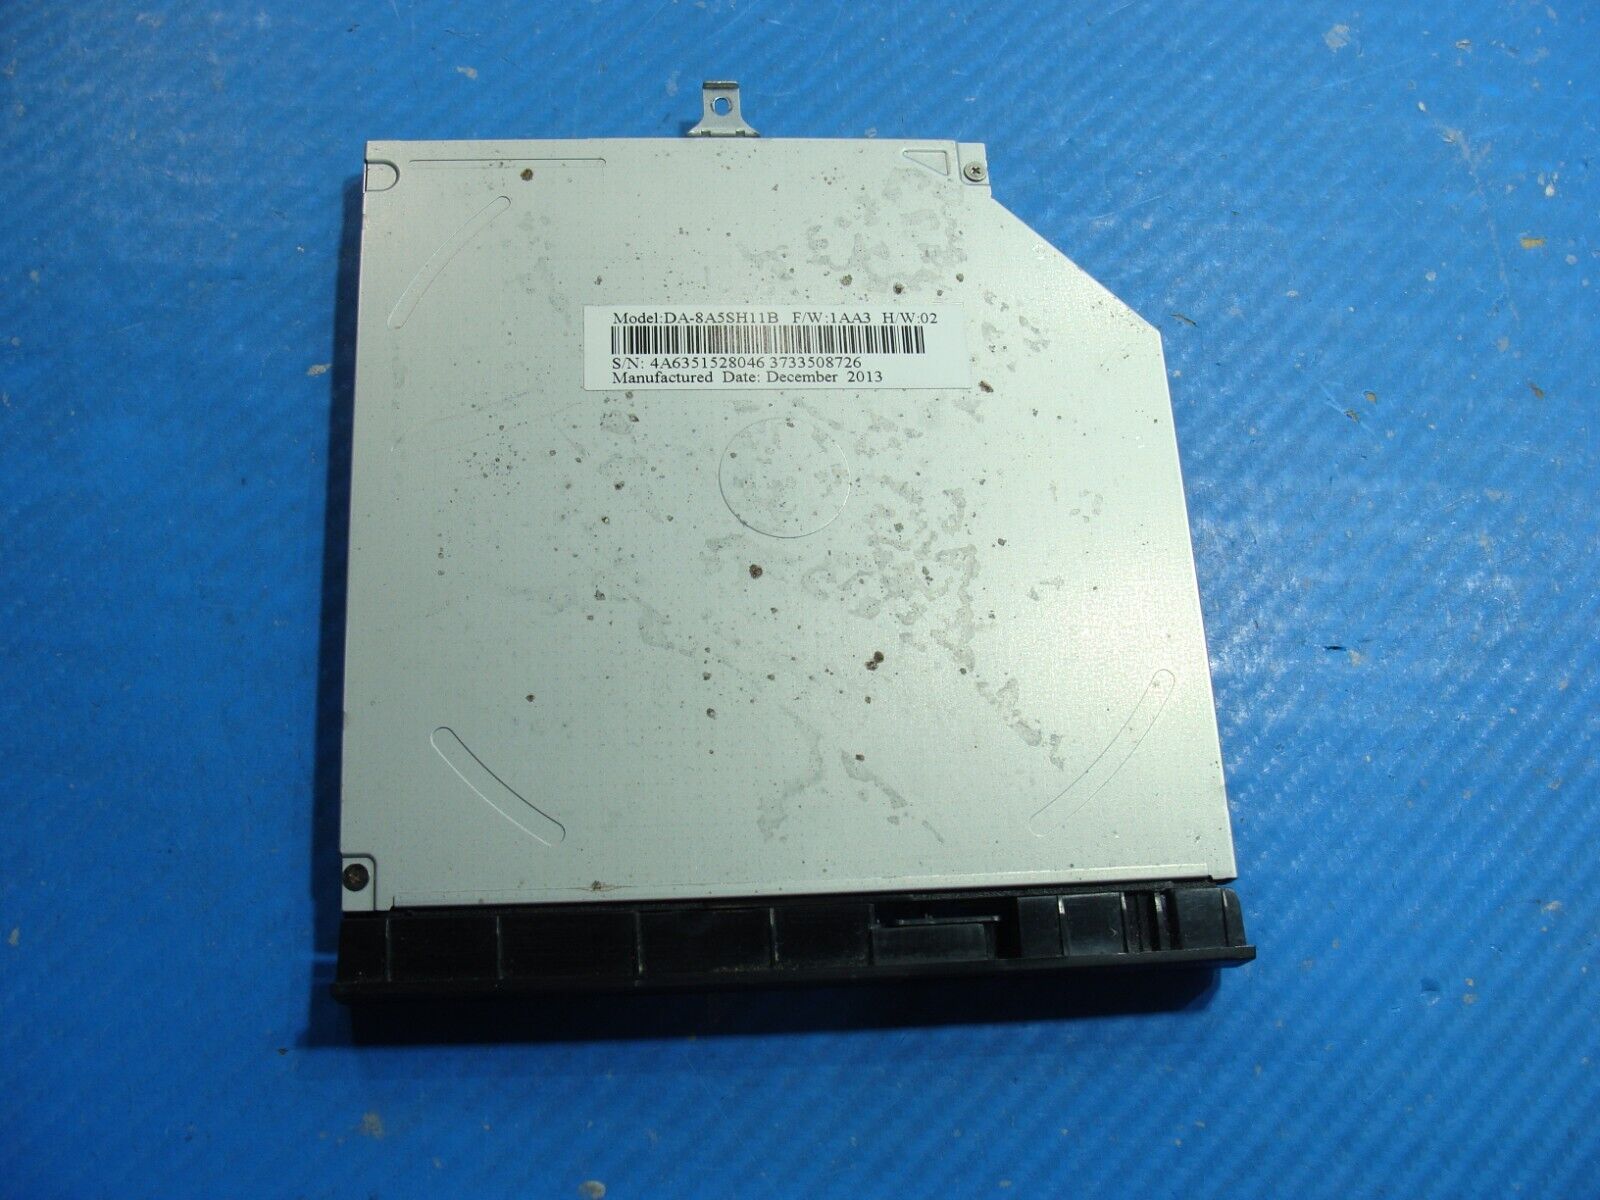 Asus 15.6” X550CA-SI50304V Genuine Laptop DVD/CD-RW Burner Drive DA-8A5SH